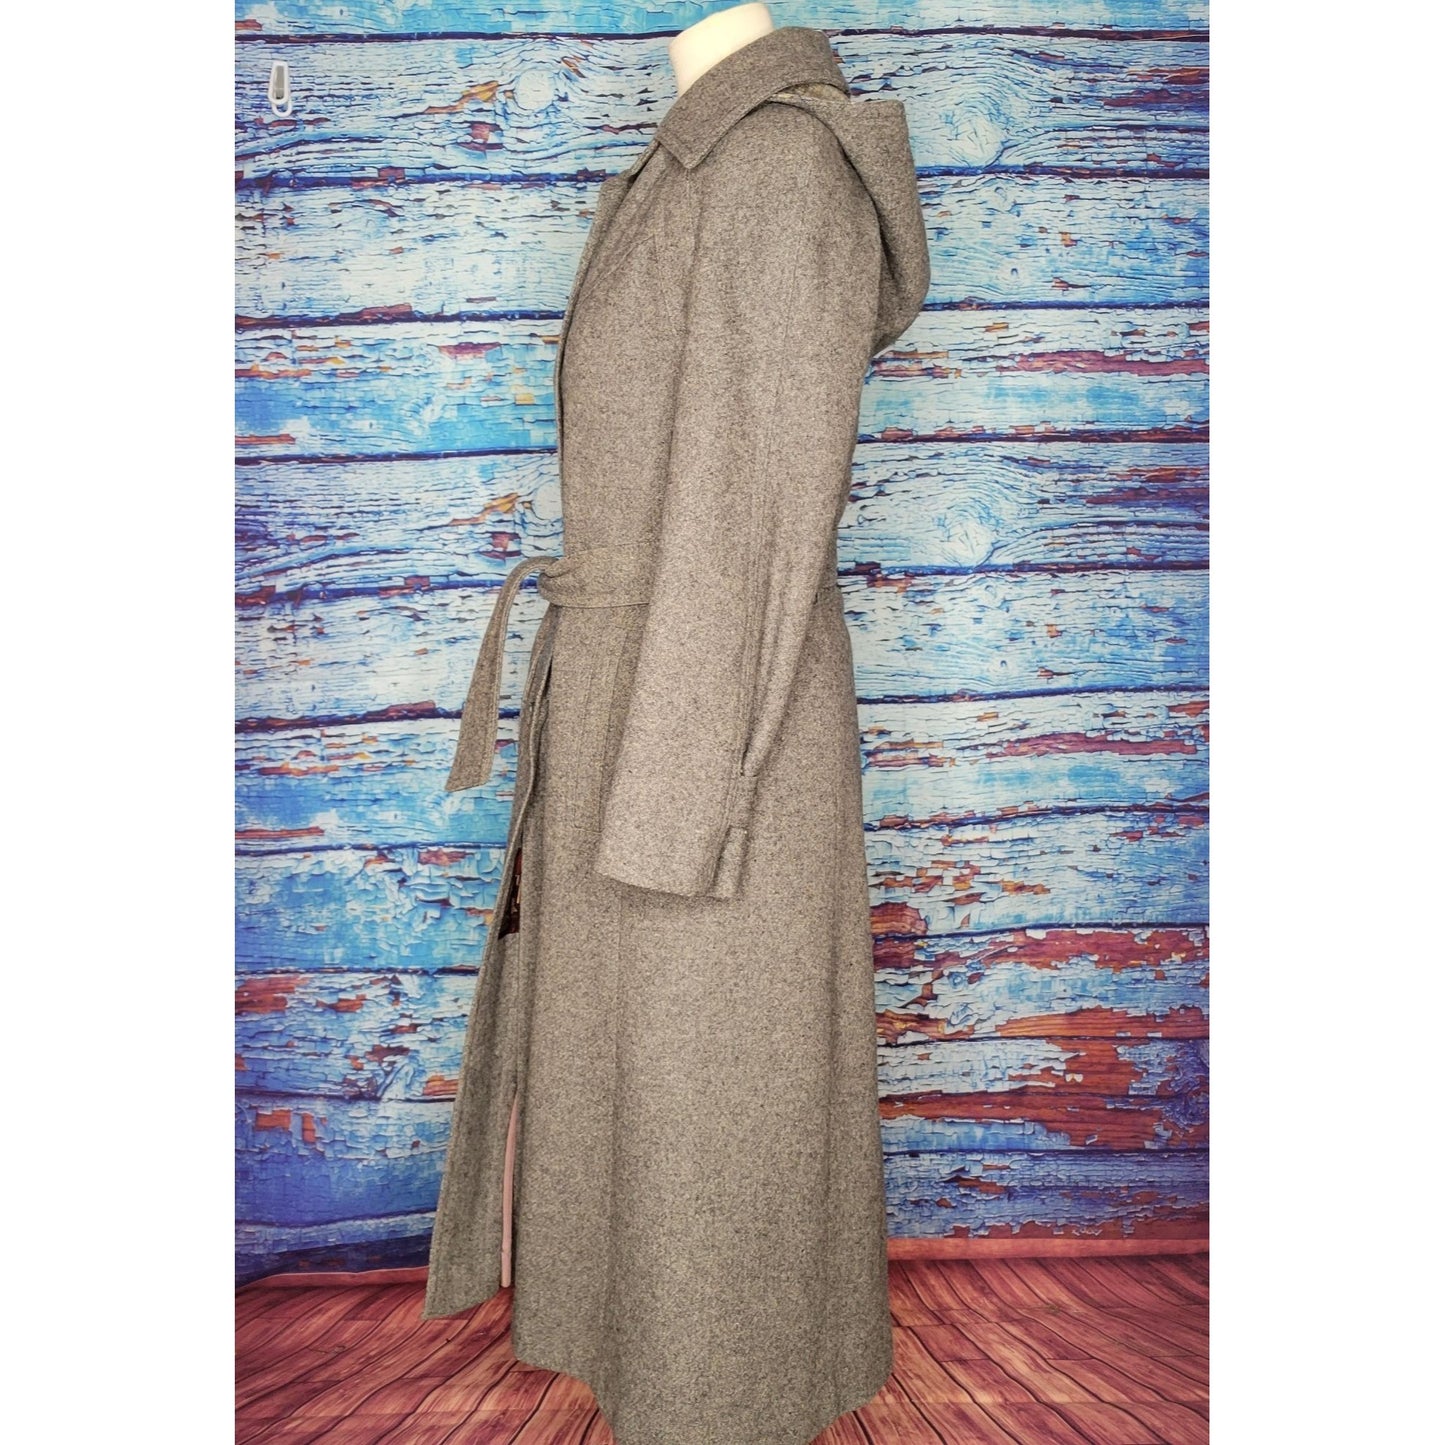 VTG Tan Tweed Coat w/ Removable Liner and Hood